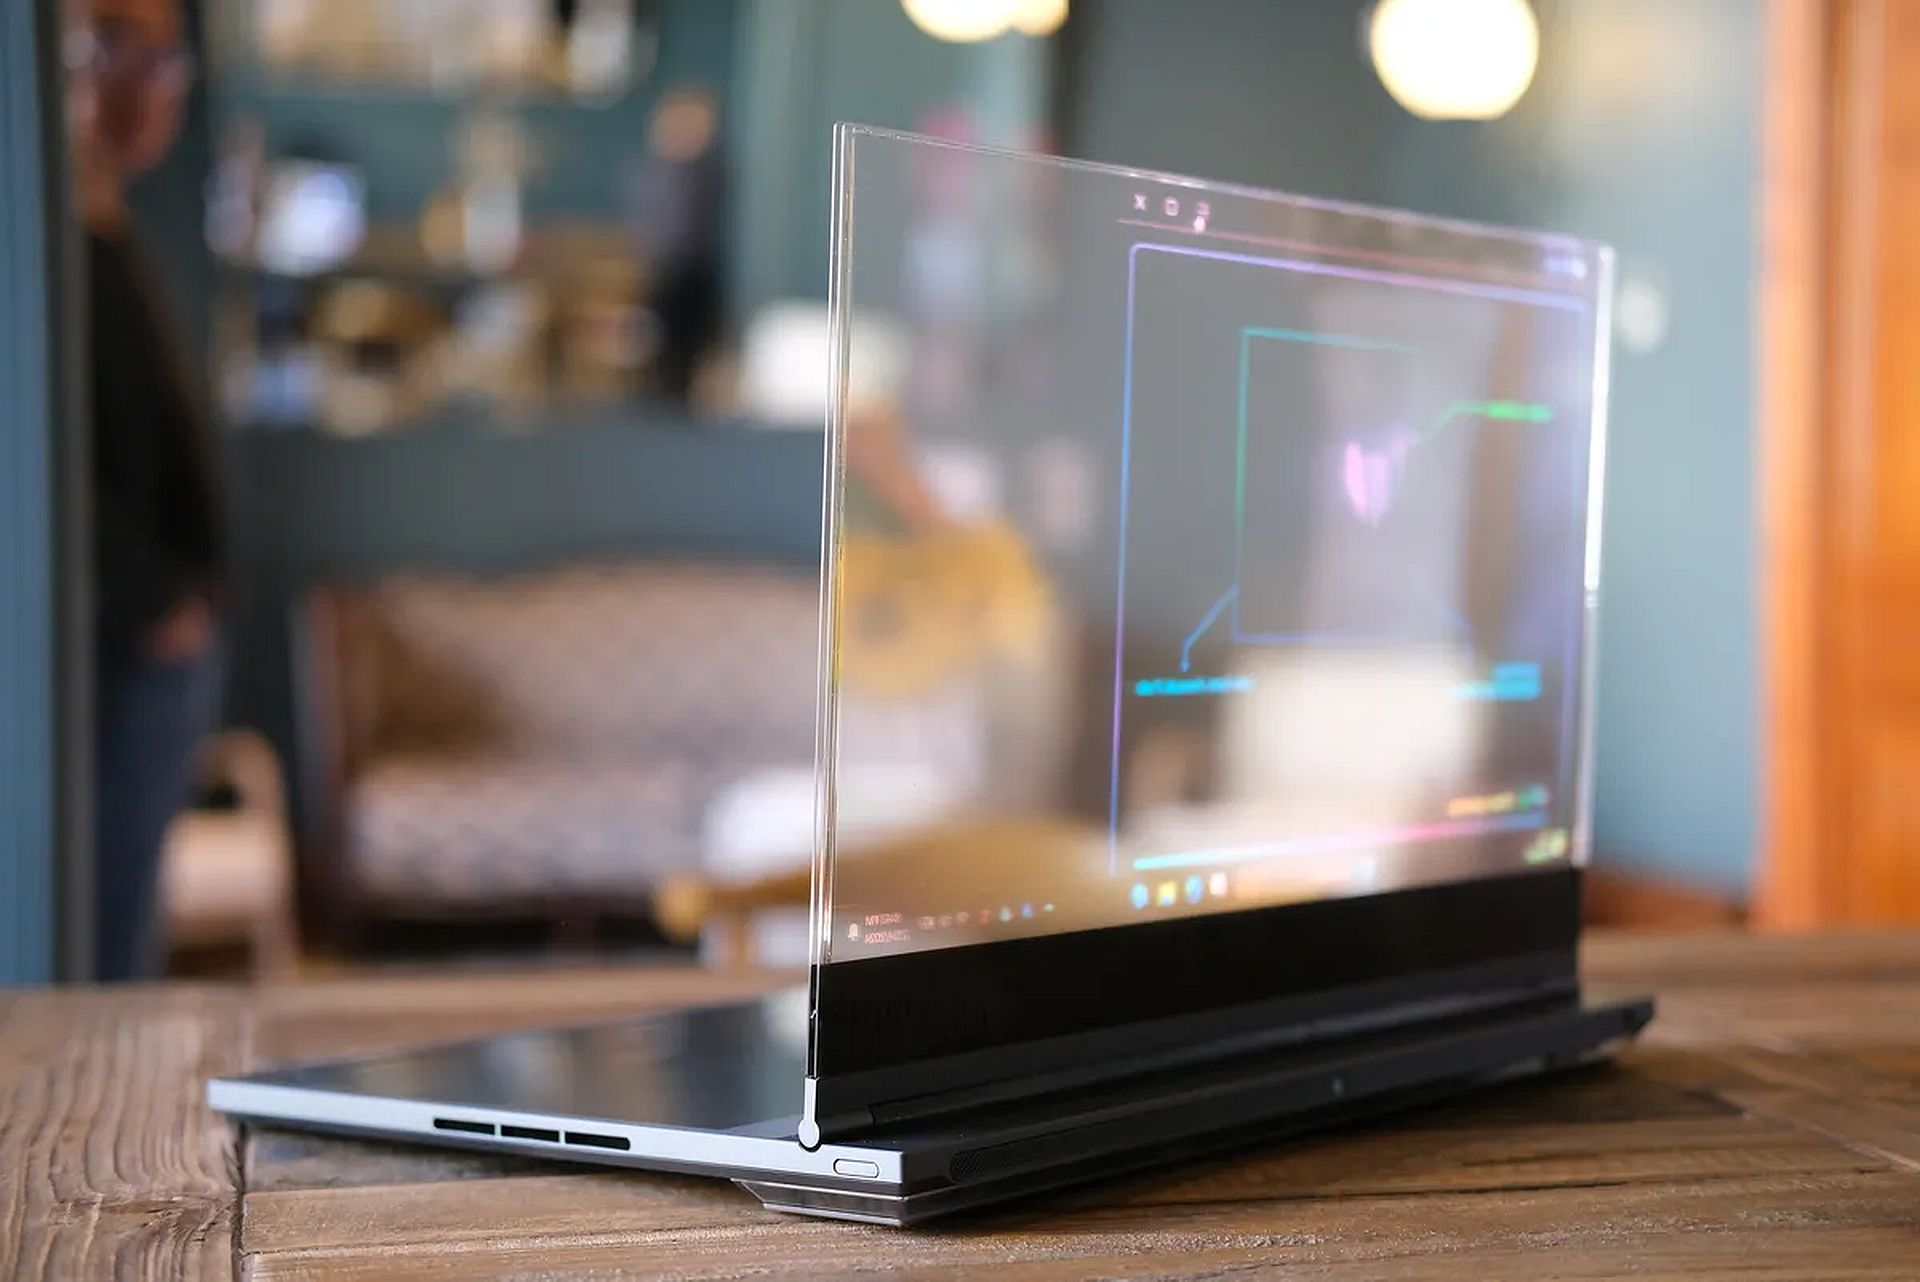 The Lenovo transparent laptop looks amazing